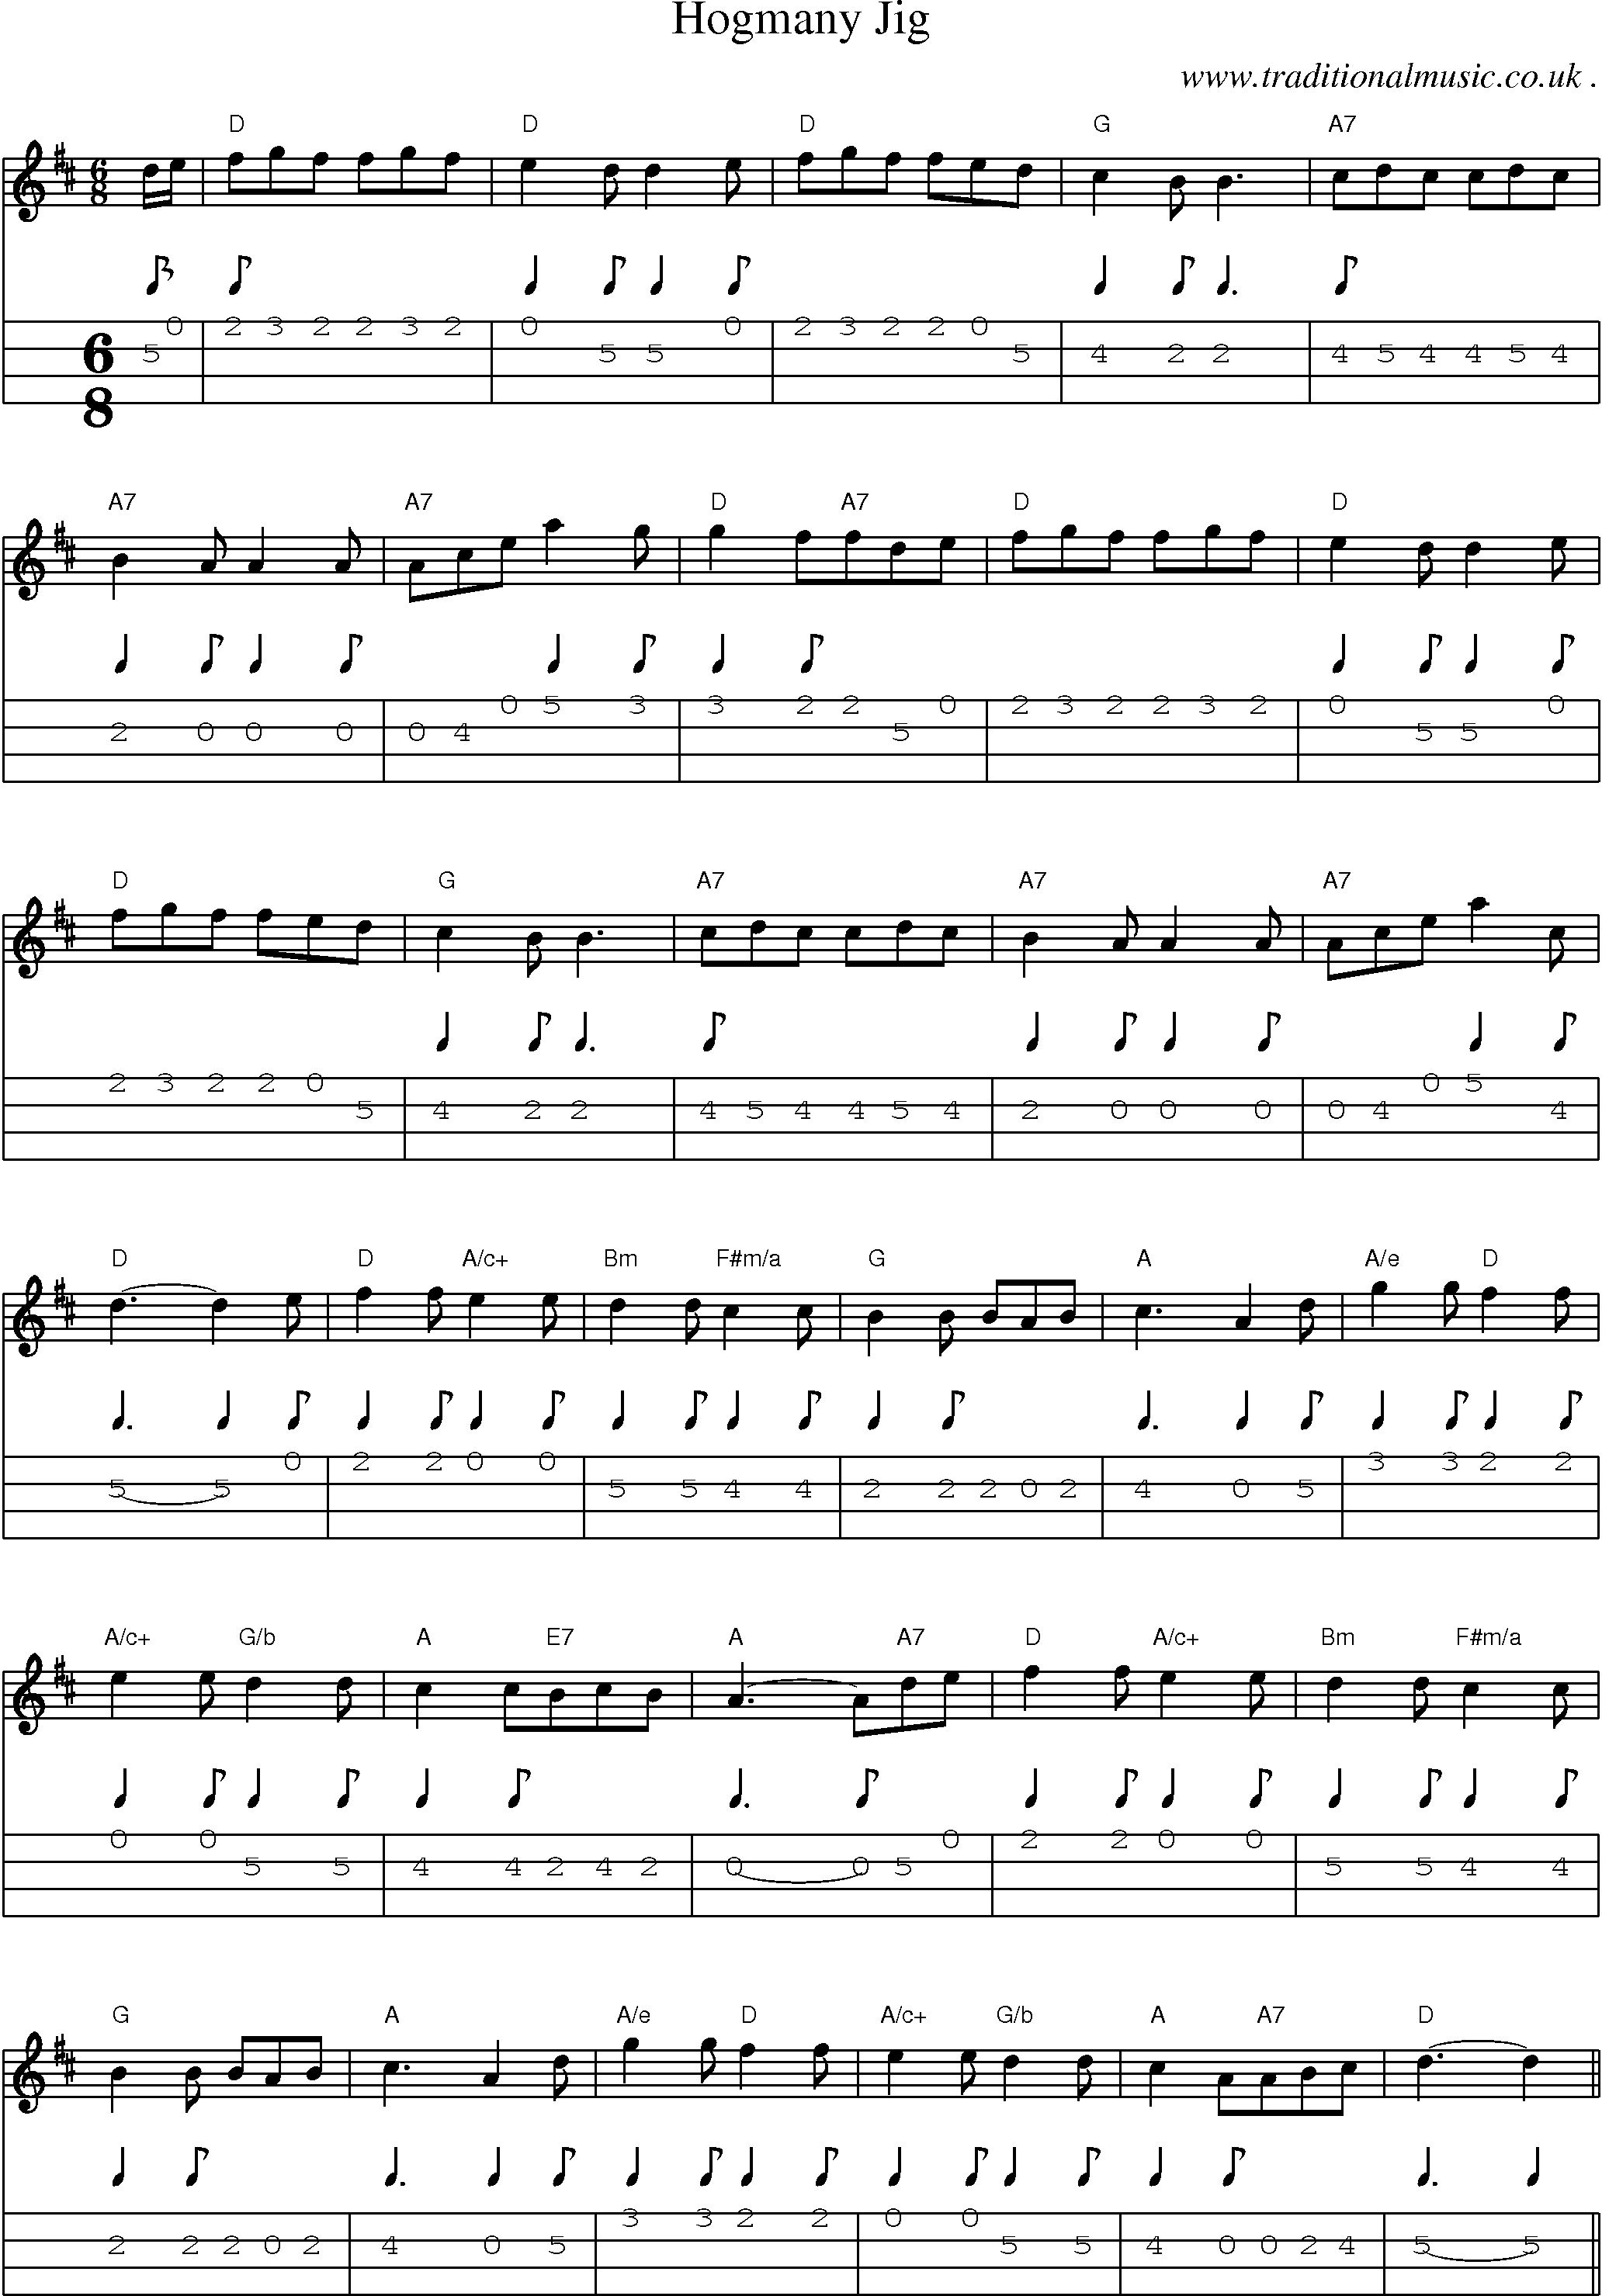 Sheet-Music and Mandolin Tabs for Hogmany Jig